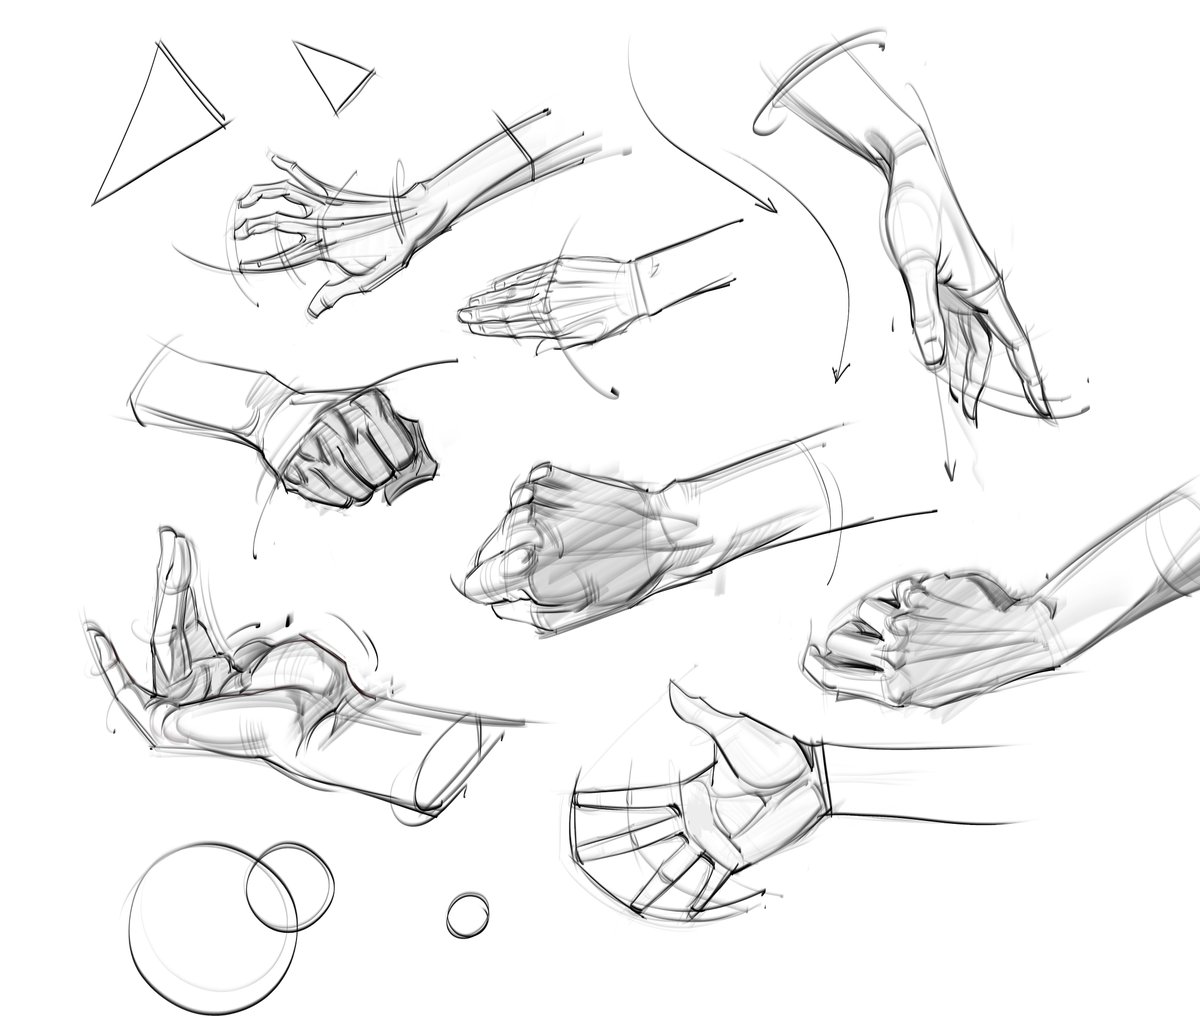 Hand gestures! #hands #gesturedrawing #figuredrawing #gottogetbetter #art #doodles #fingers #palm #wrist #shading #lineart #humananatomy #anatomy #handposes